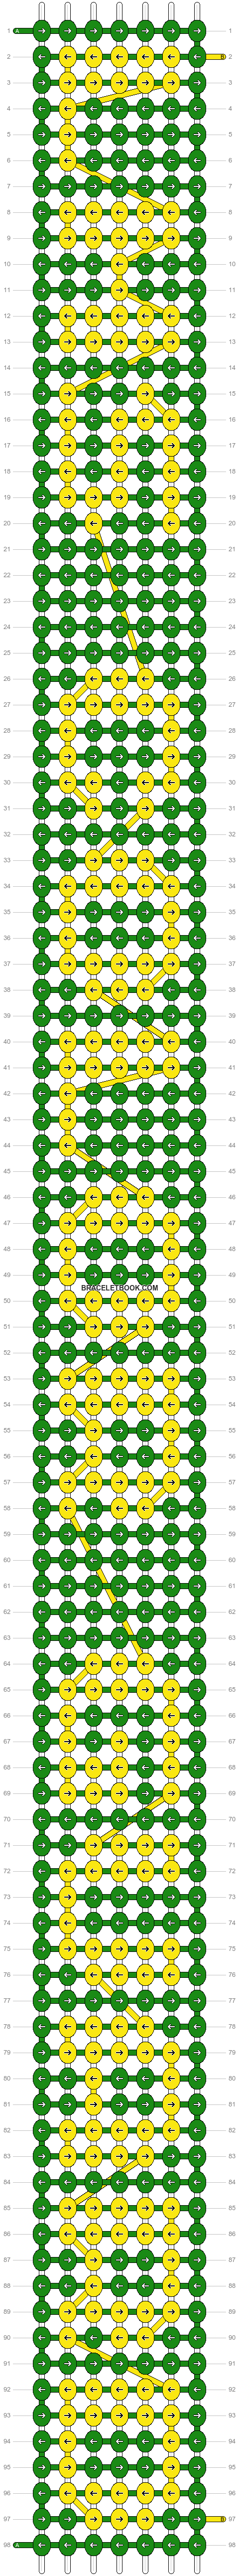 Alpha pattern #7173 variation #60797 pattern